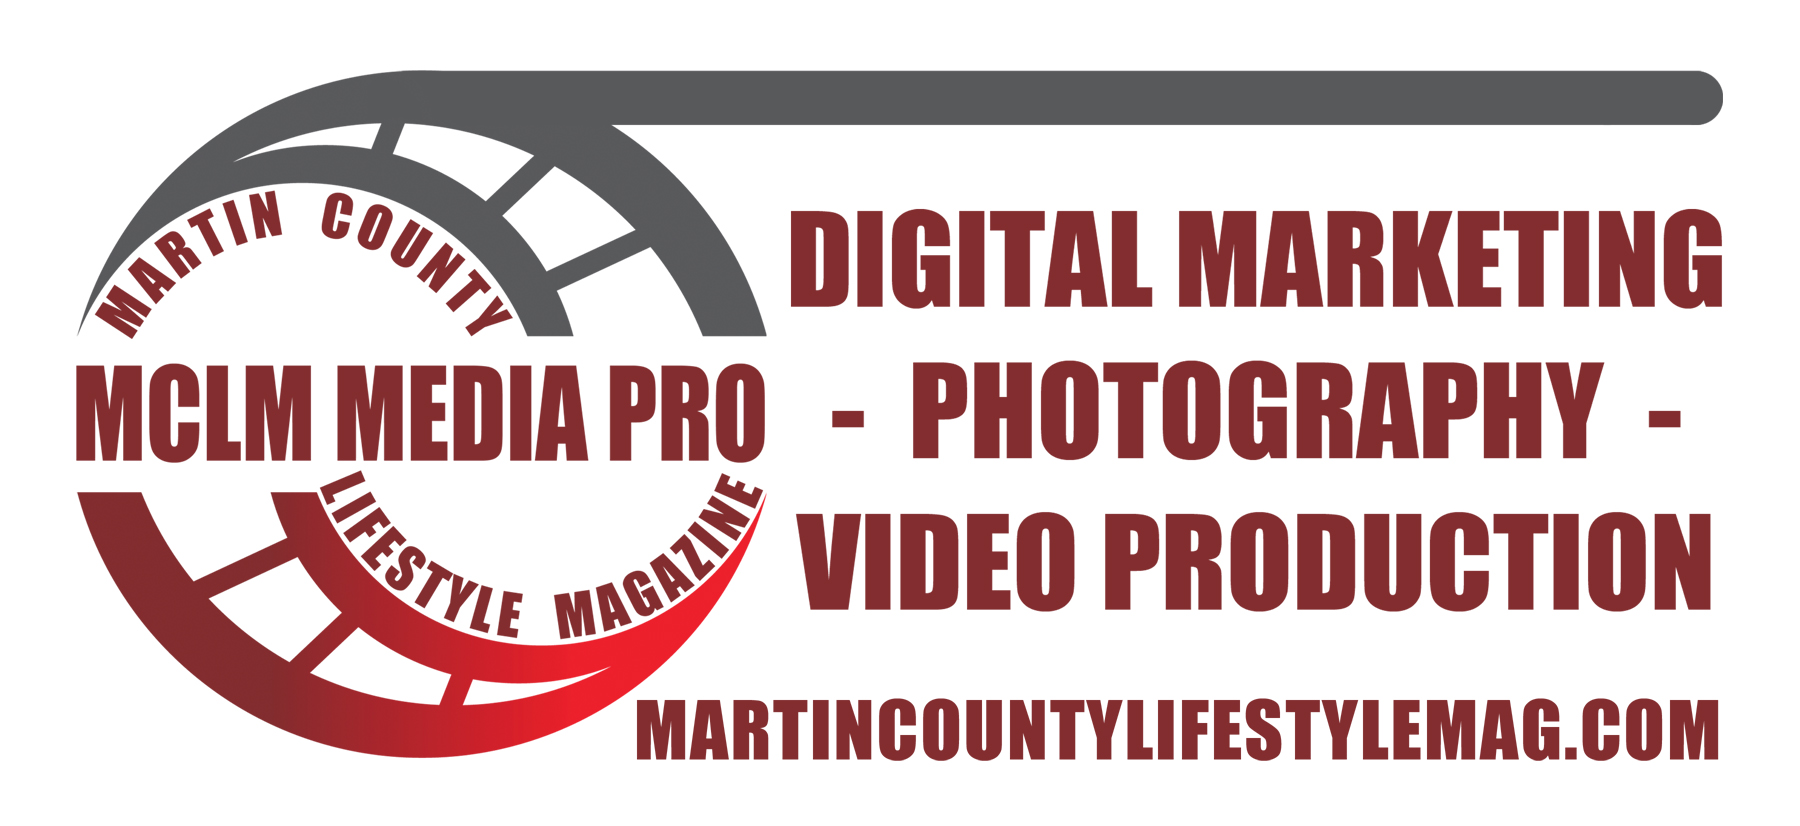 Martin County Lifestyle Magazine - MCLM Media Pro. Social Media Marketing Agency in Stuart, Florida. Professional Photography and Video Production on the Treasure Coast